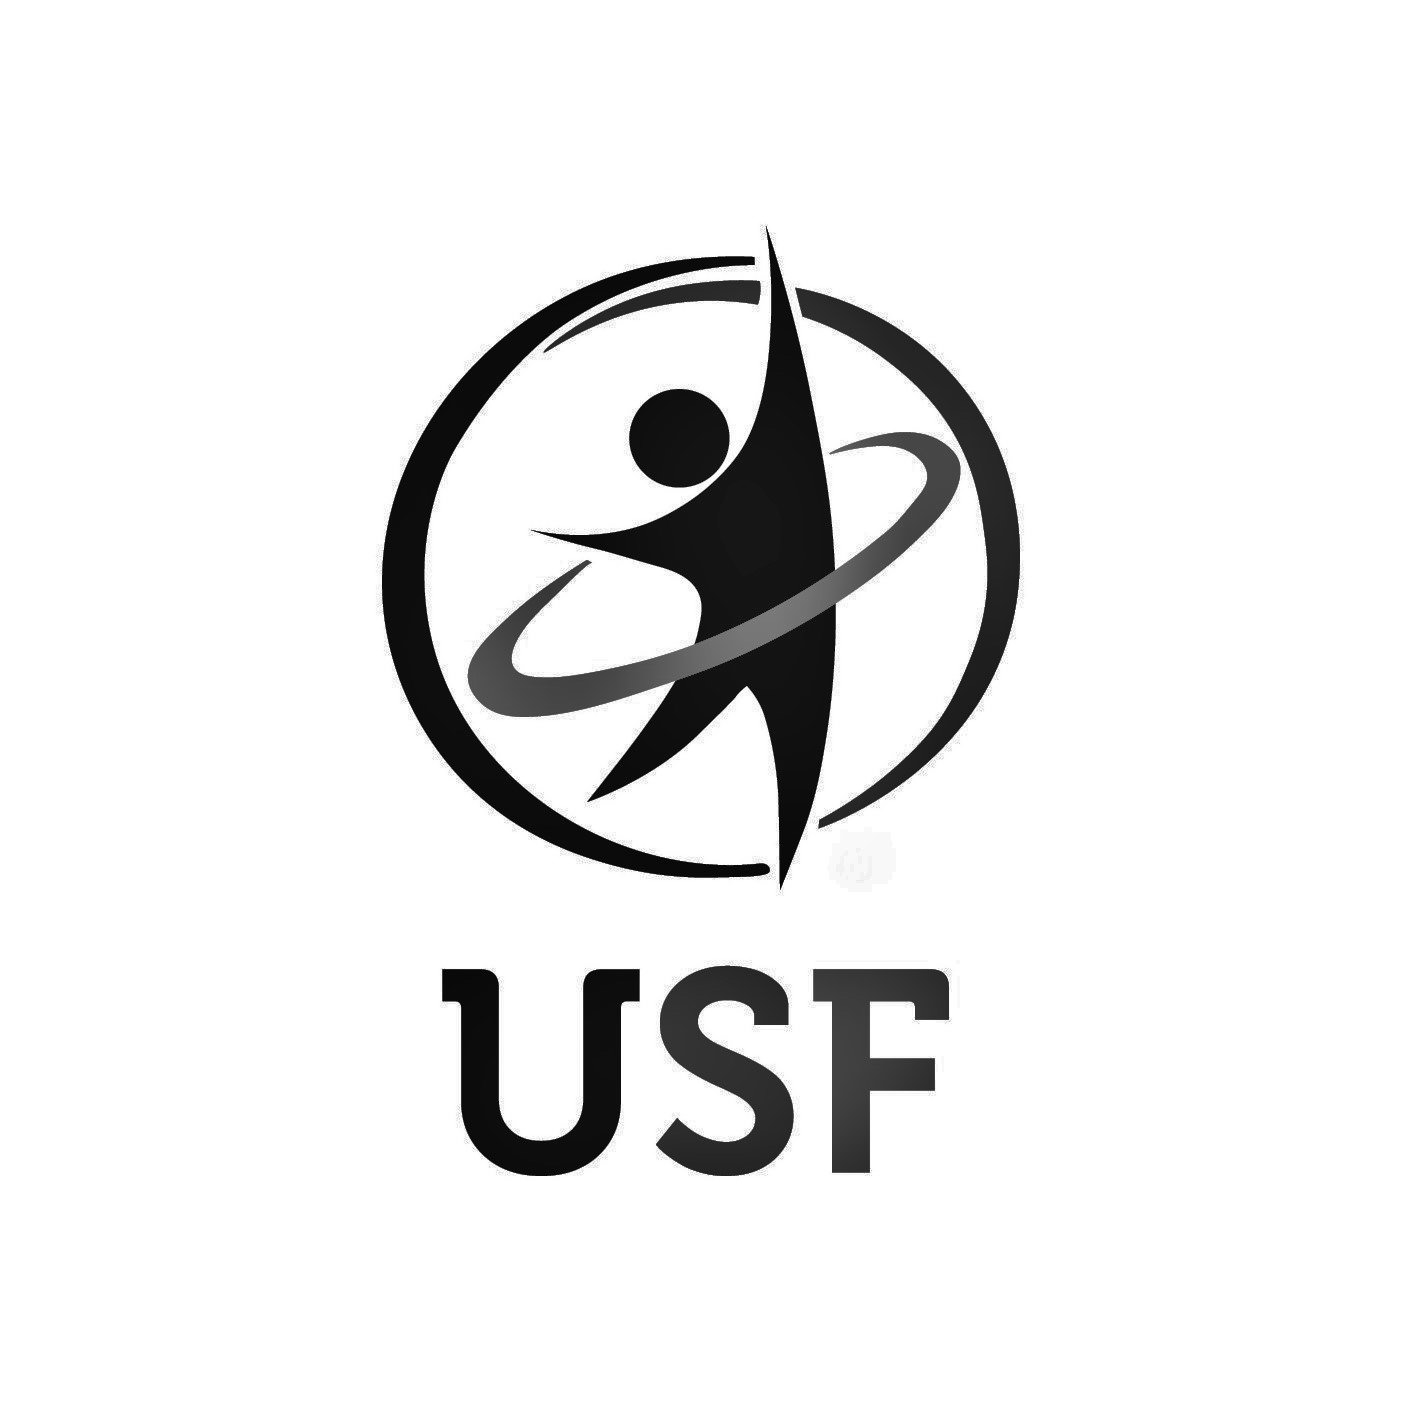 Trademark Logo USF